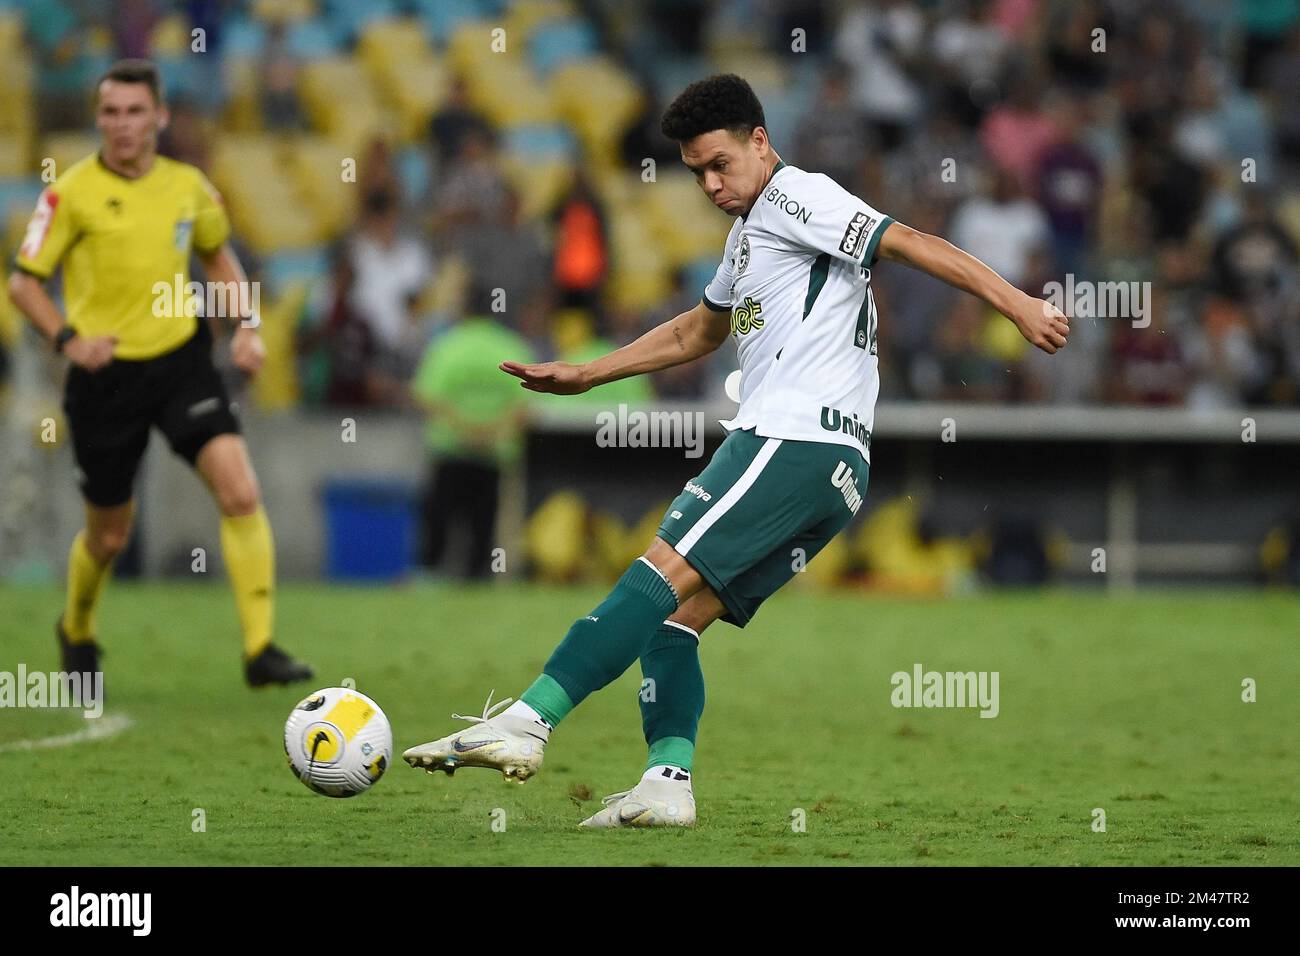 Eder Militao Bra Football Soccer Kirin Editorial Stock Photo - Stock Image